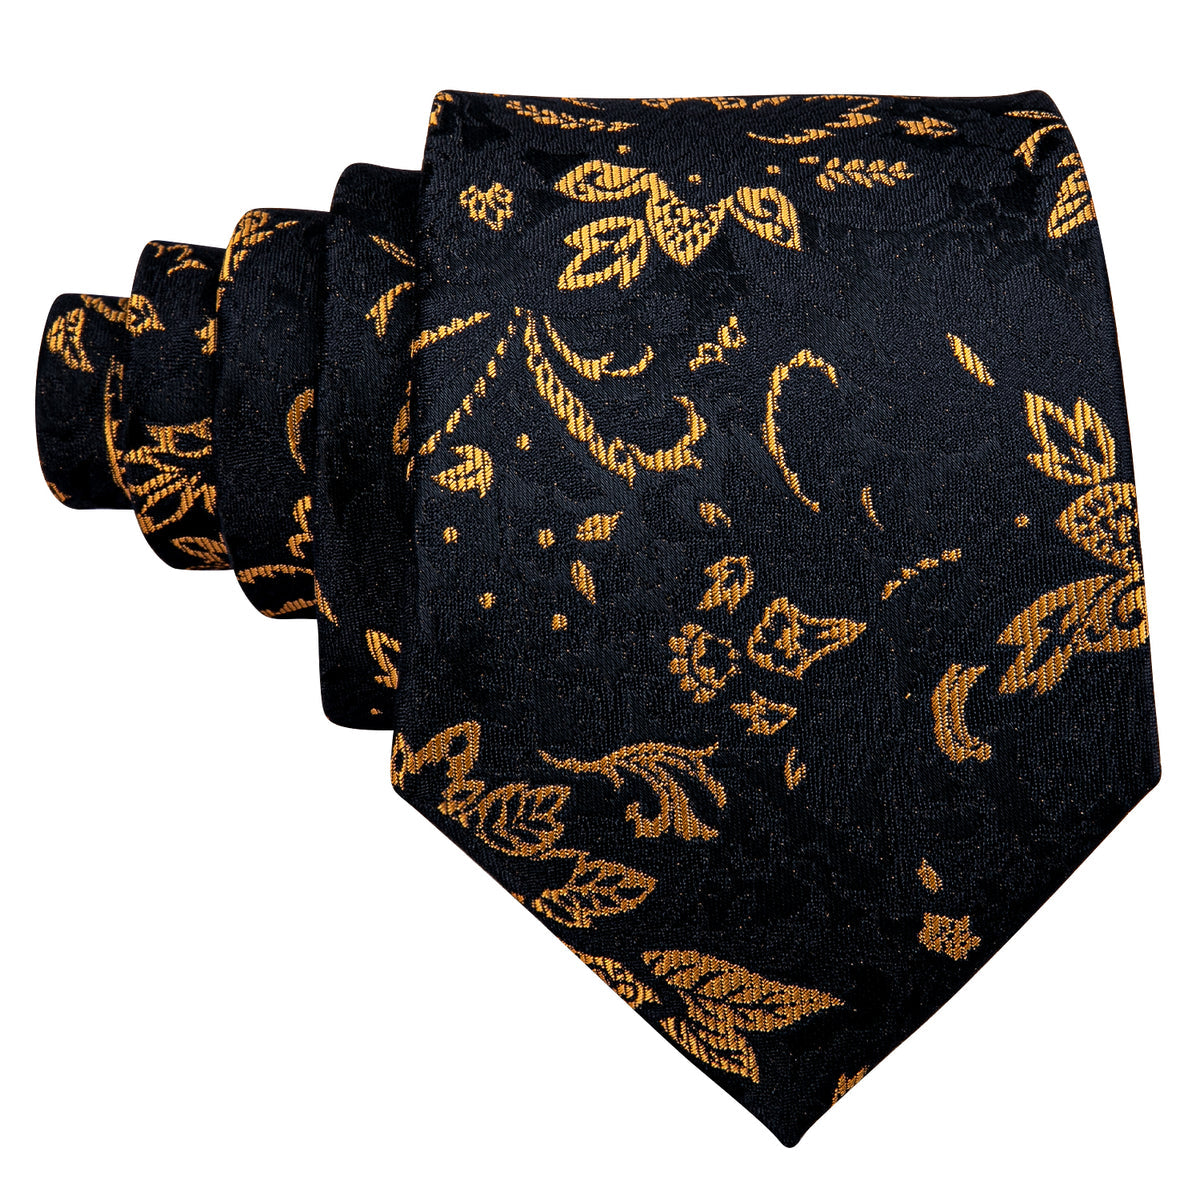 Men’s Silk Coordinated Tie Set - Gold Black Paisley (6001)